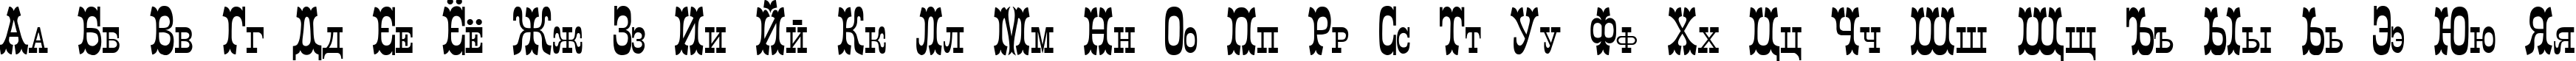 Пример написания русского алфавита шрифтом Italiano